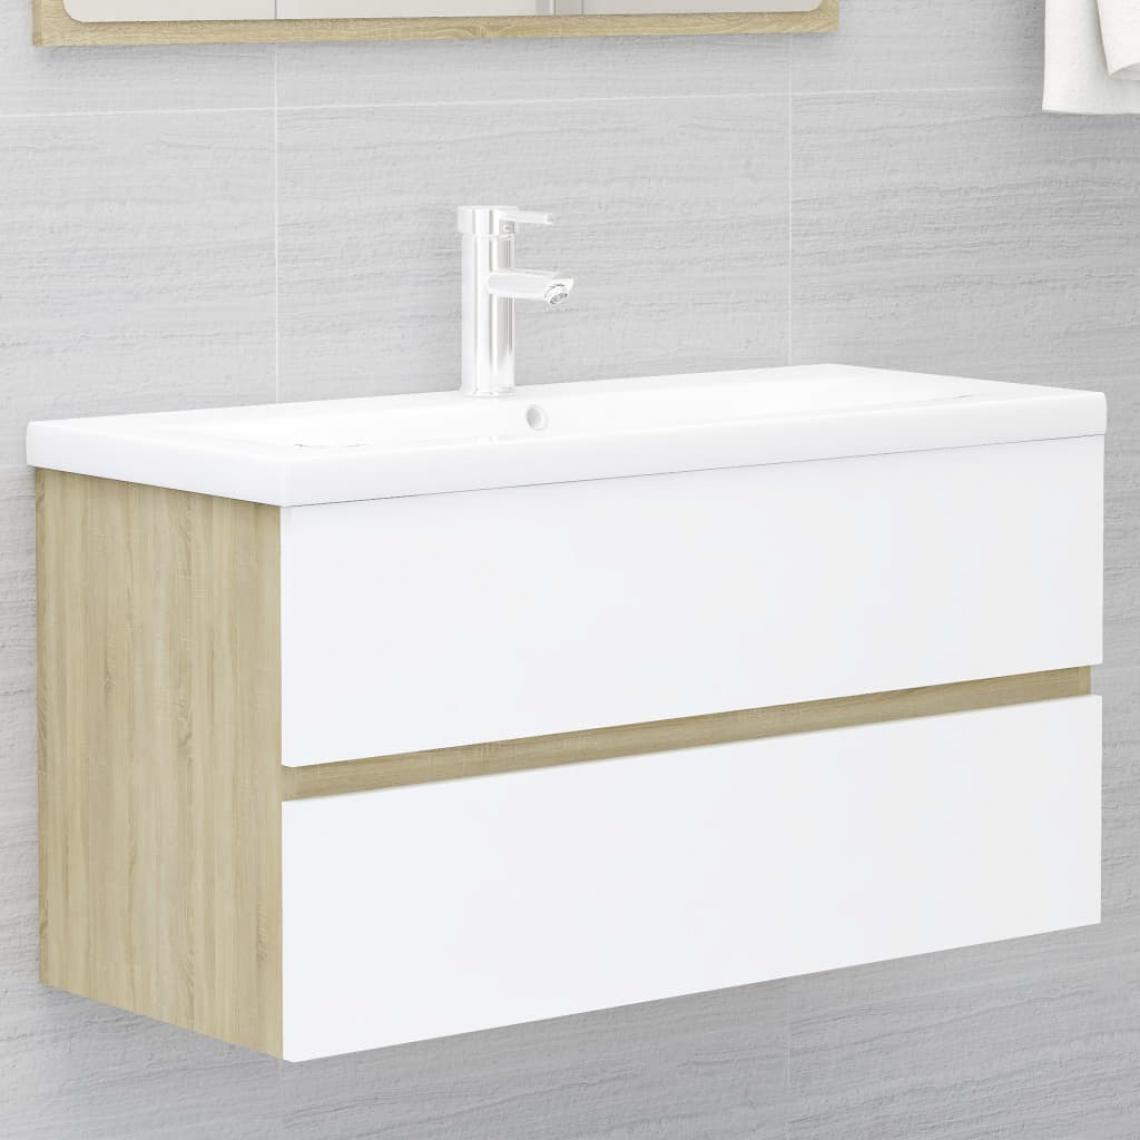 Vidaxl - vidaXL Armoire d'évier et lavabo intégré Blanc/chêne sonoma Aggloméré - meuble bas salle de bain